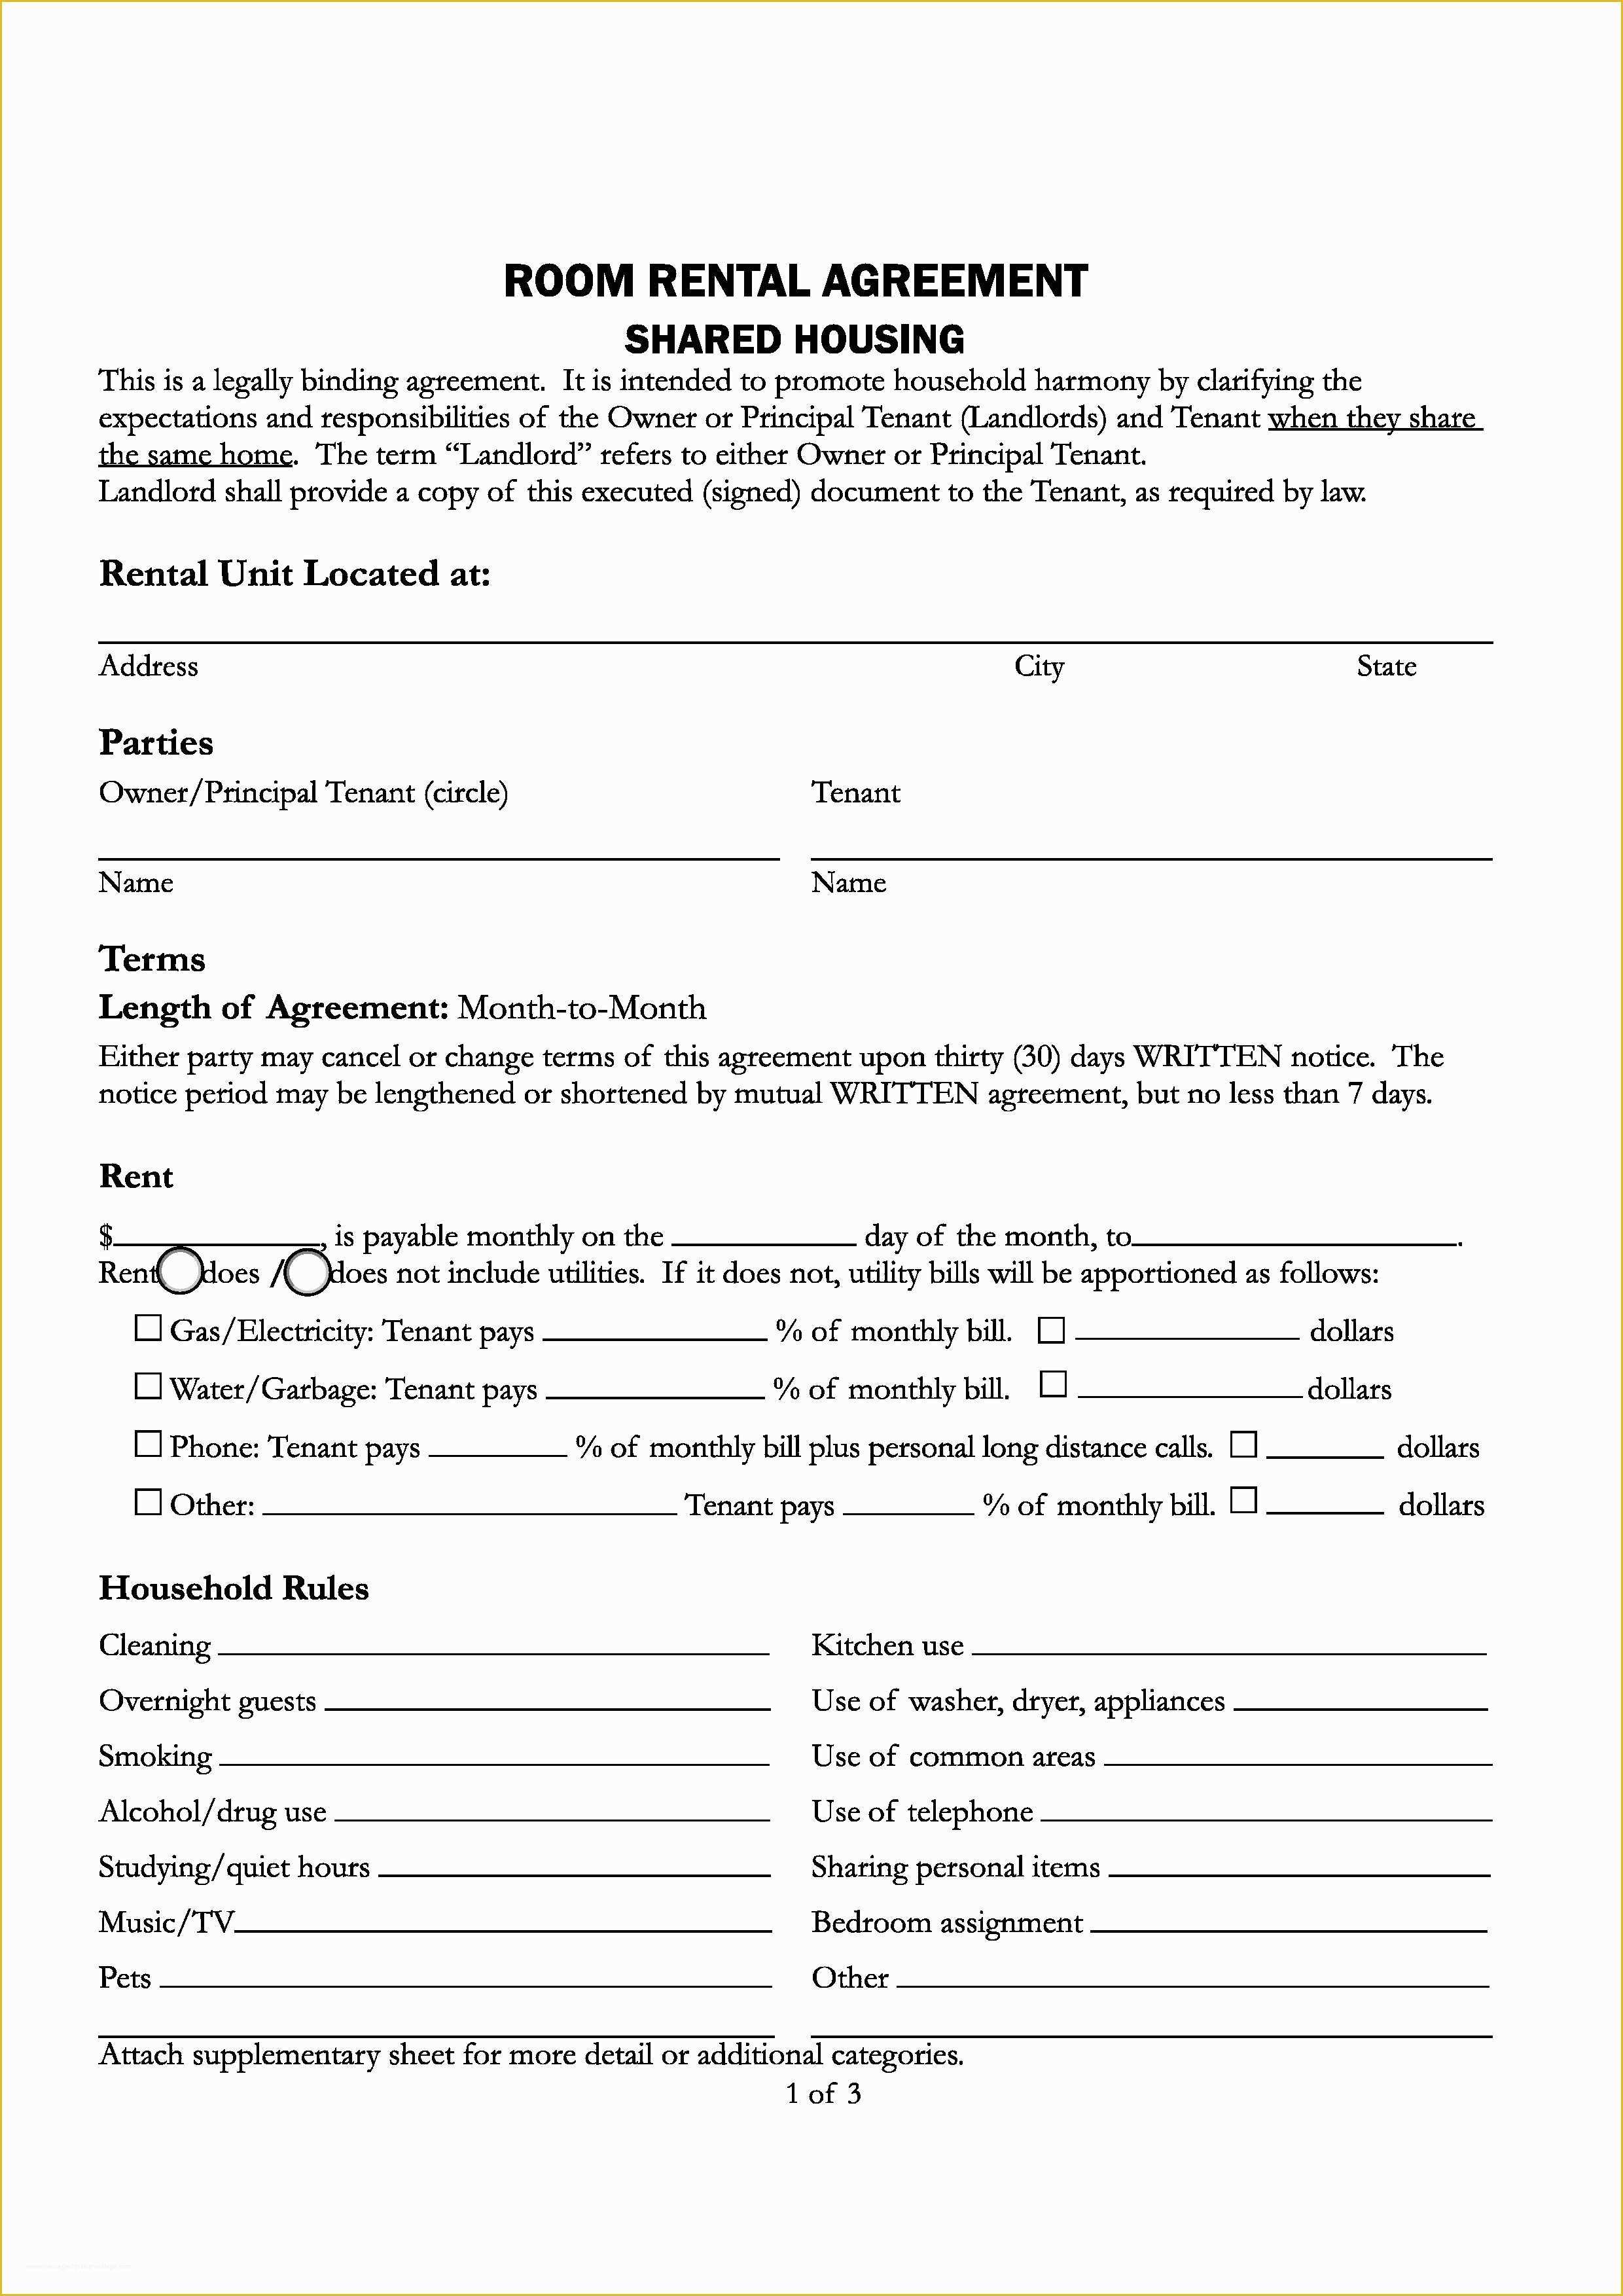 Free Room Rental Agreement Template Of Free Santa Cruz County California Room Rental Agreement